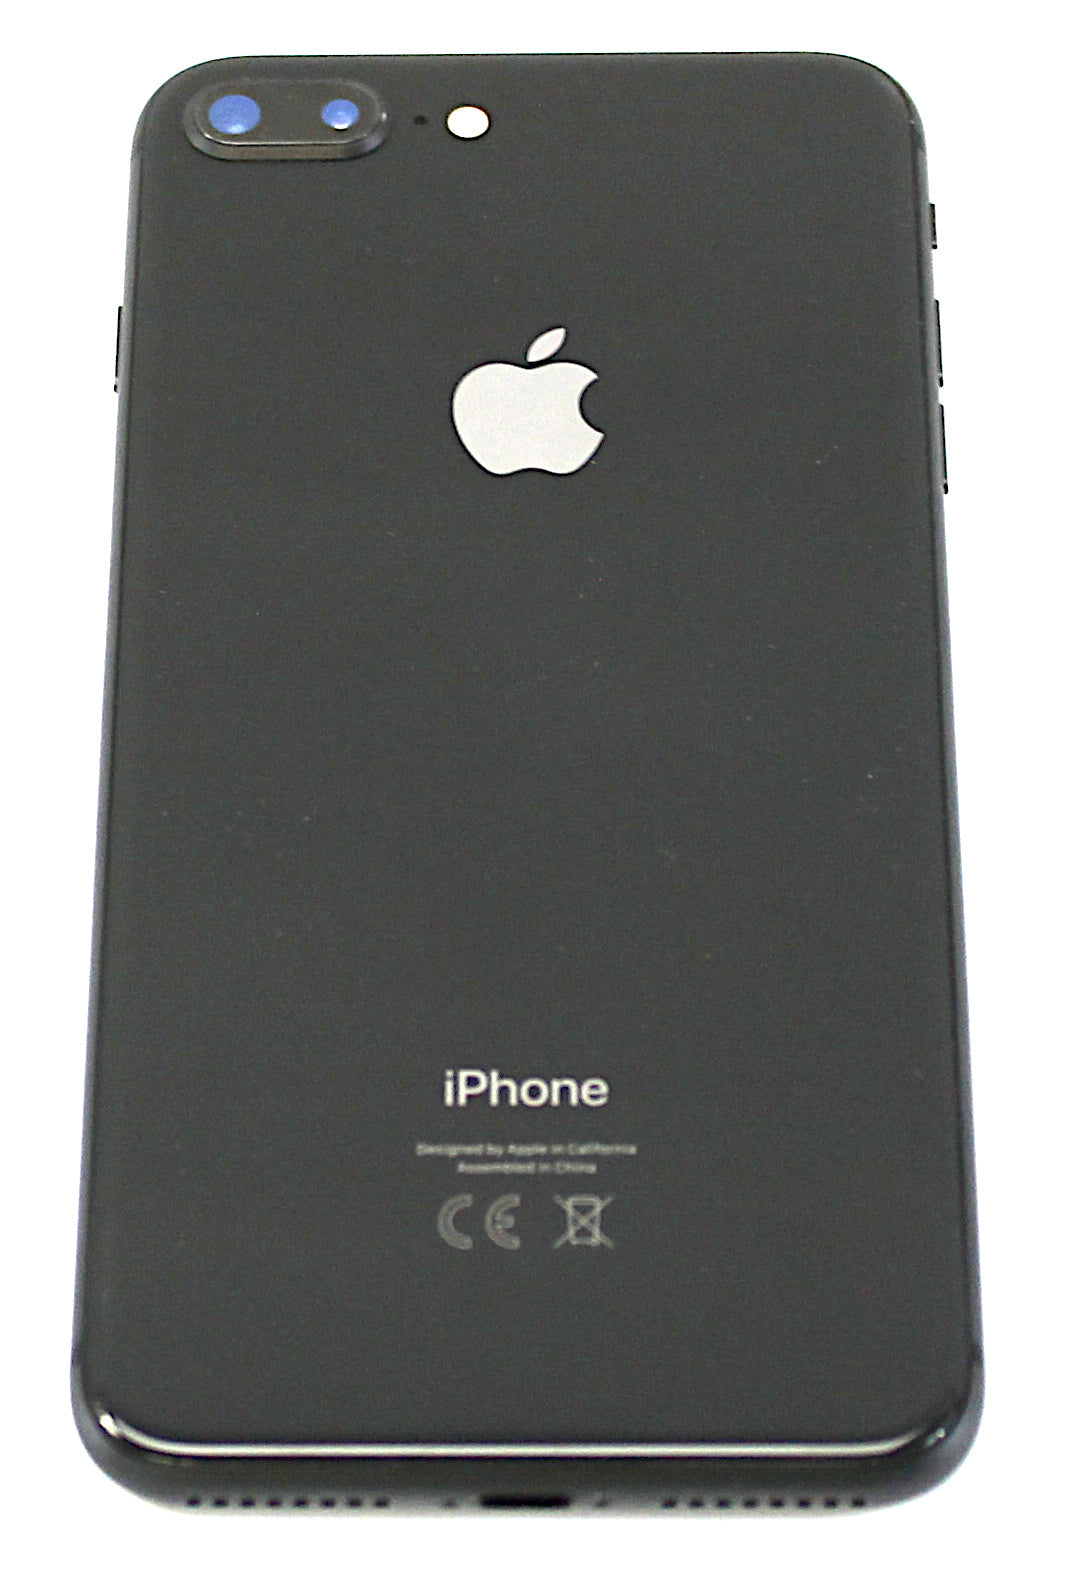 Apple Iphone 8 Plus SmartPhone, 64GB, Space Grey, Network Unlocked, A1897